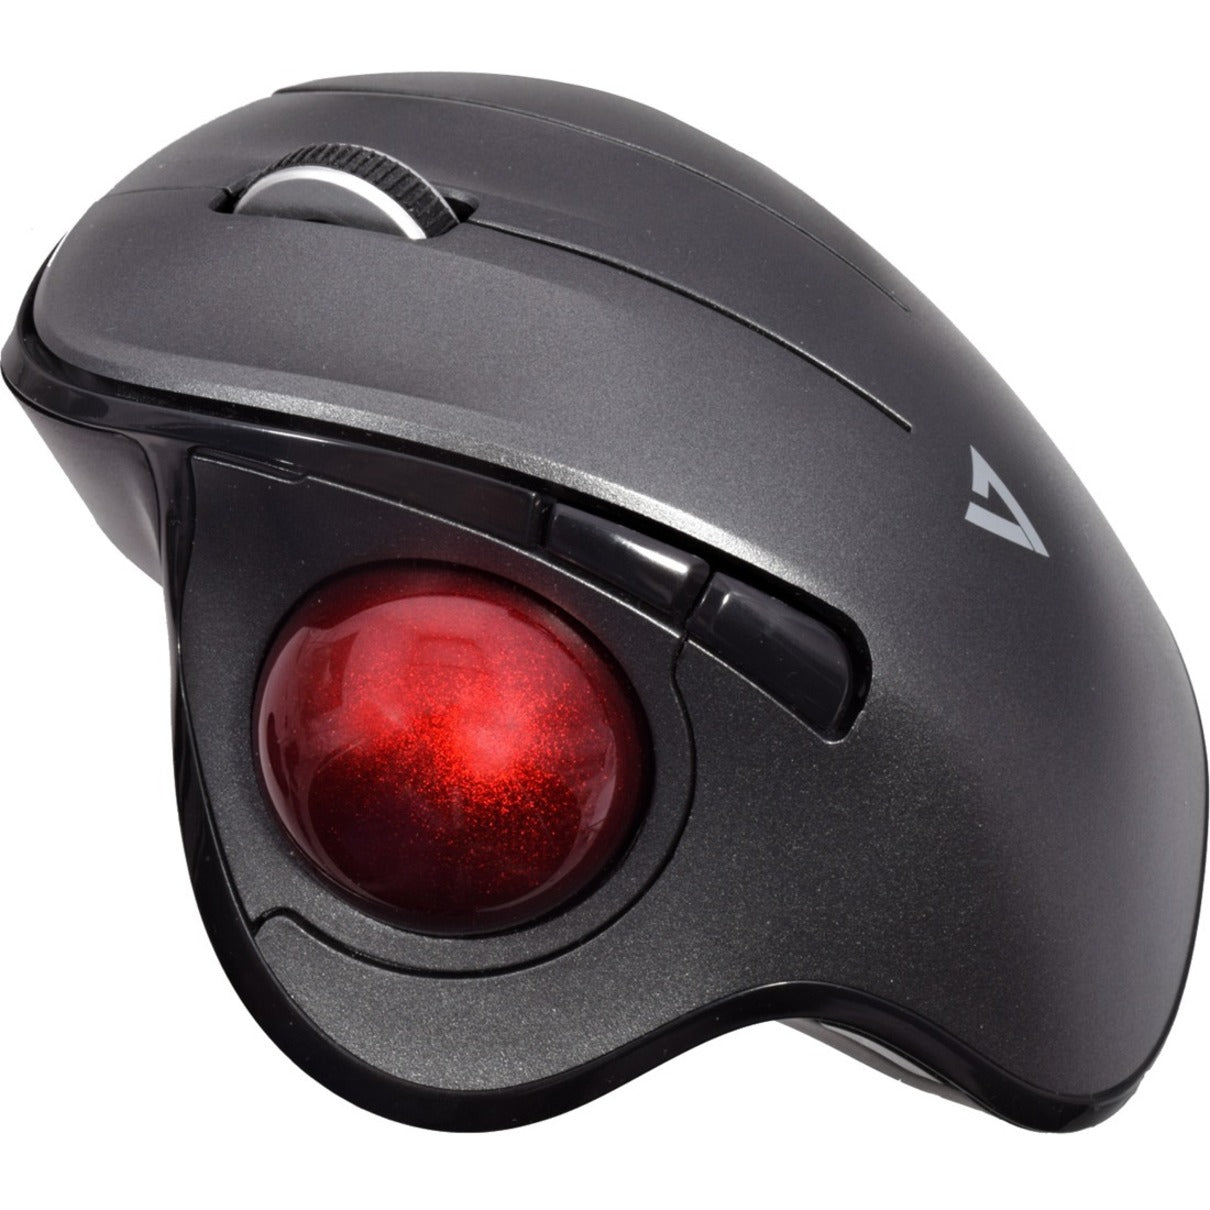 V7 Vertical Ergonomic Trackball Mouse, Wireless 6 Button Auto-speed Dpi, Ergo (MW650) Alternate-Image2 image